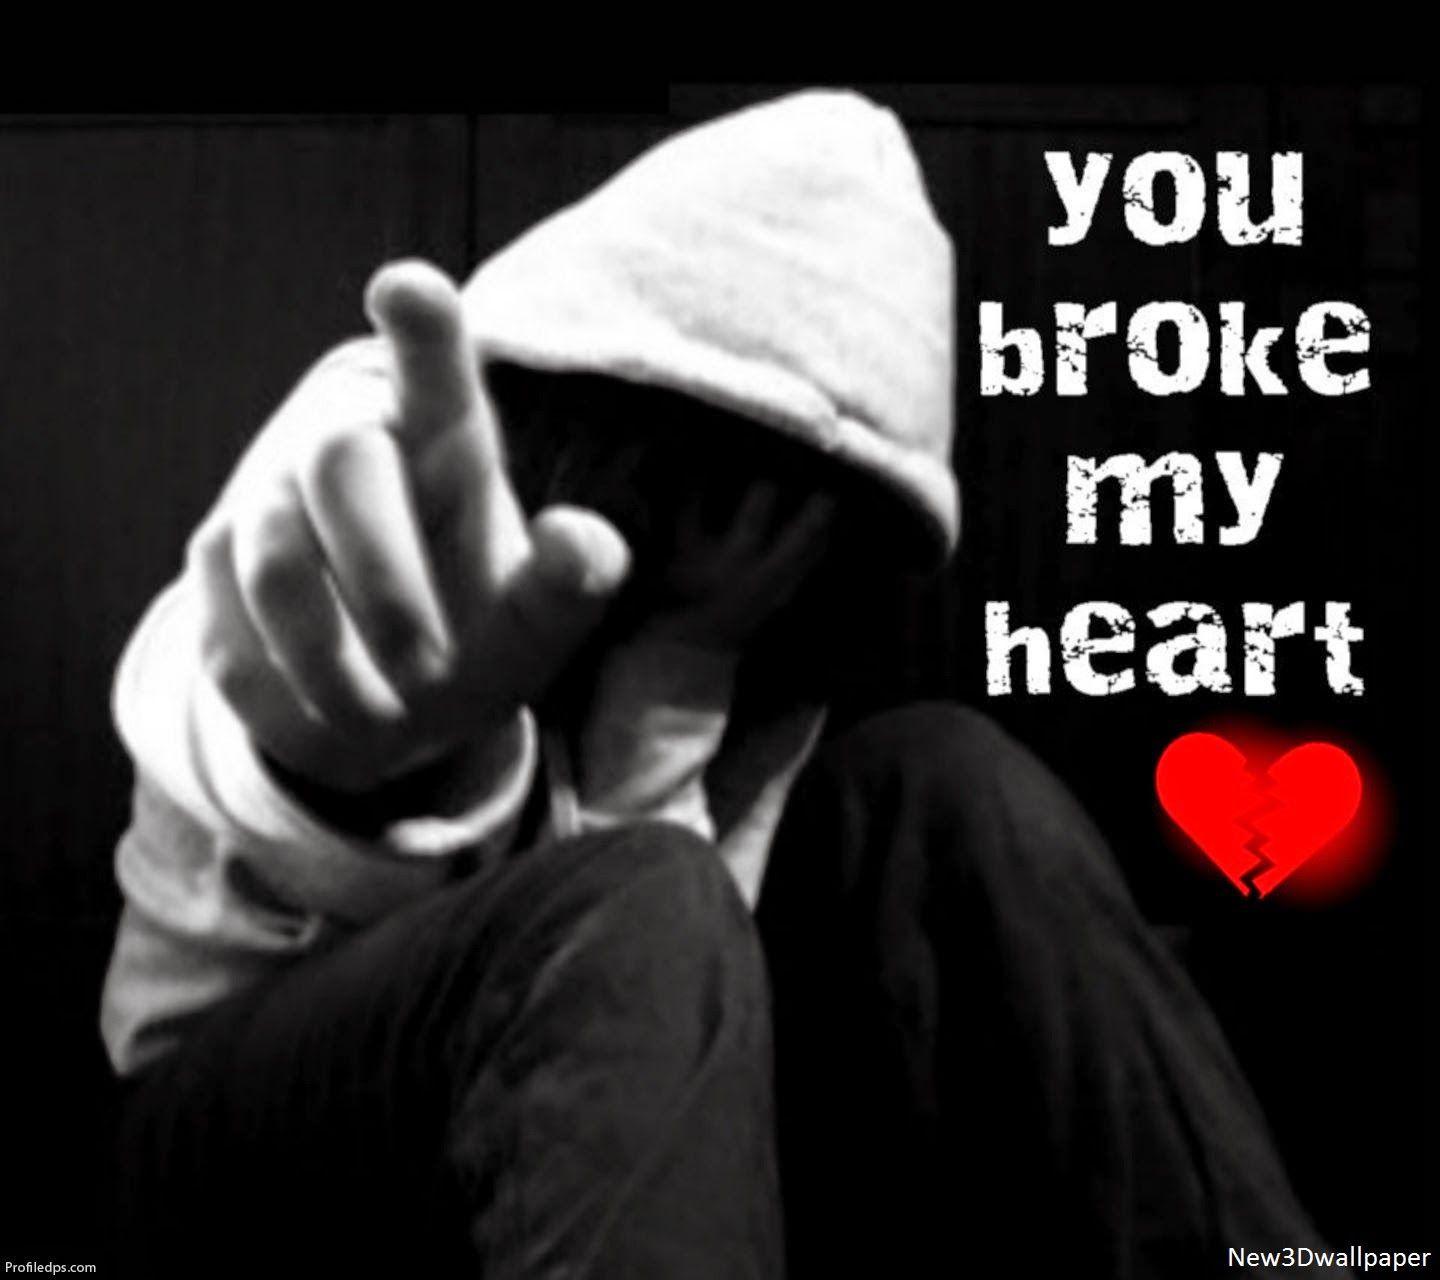 Broken heart image ideas. broken heart image, whatsapp profile picture, whatsapp dp image